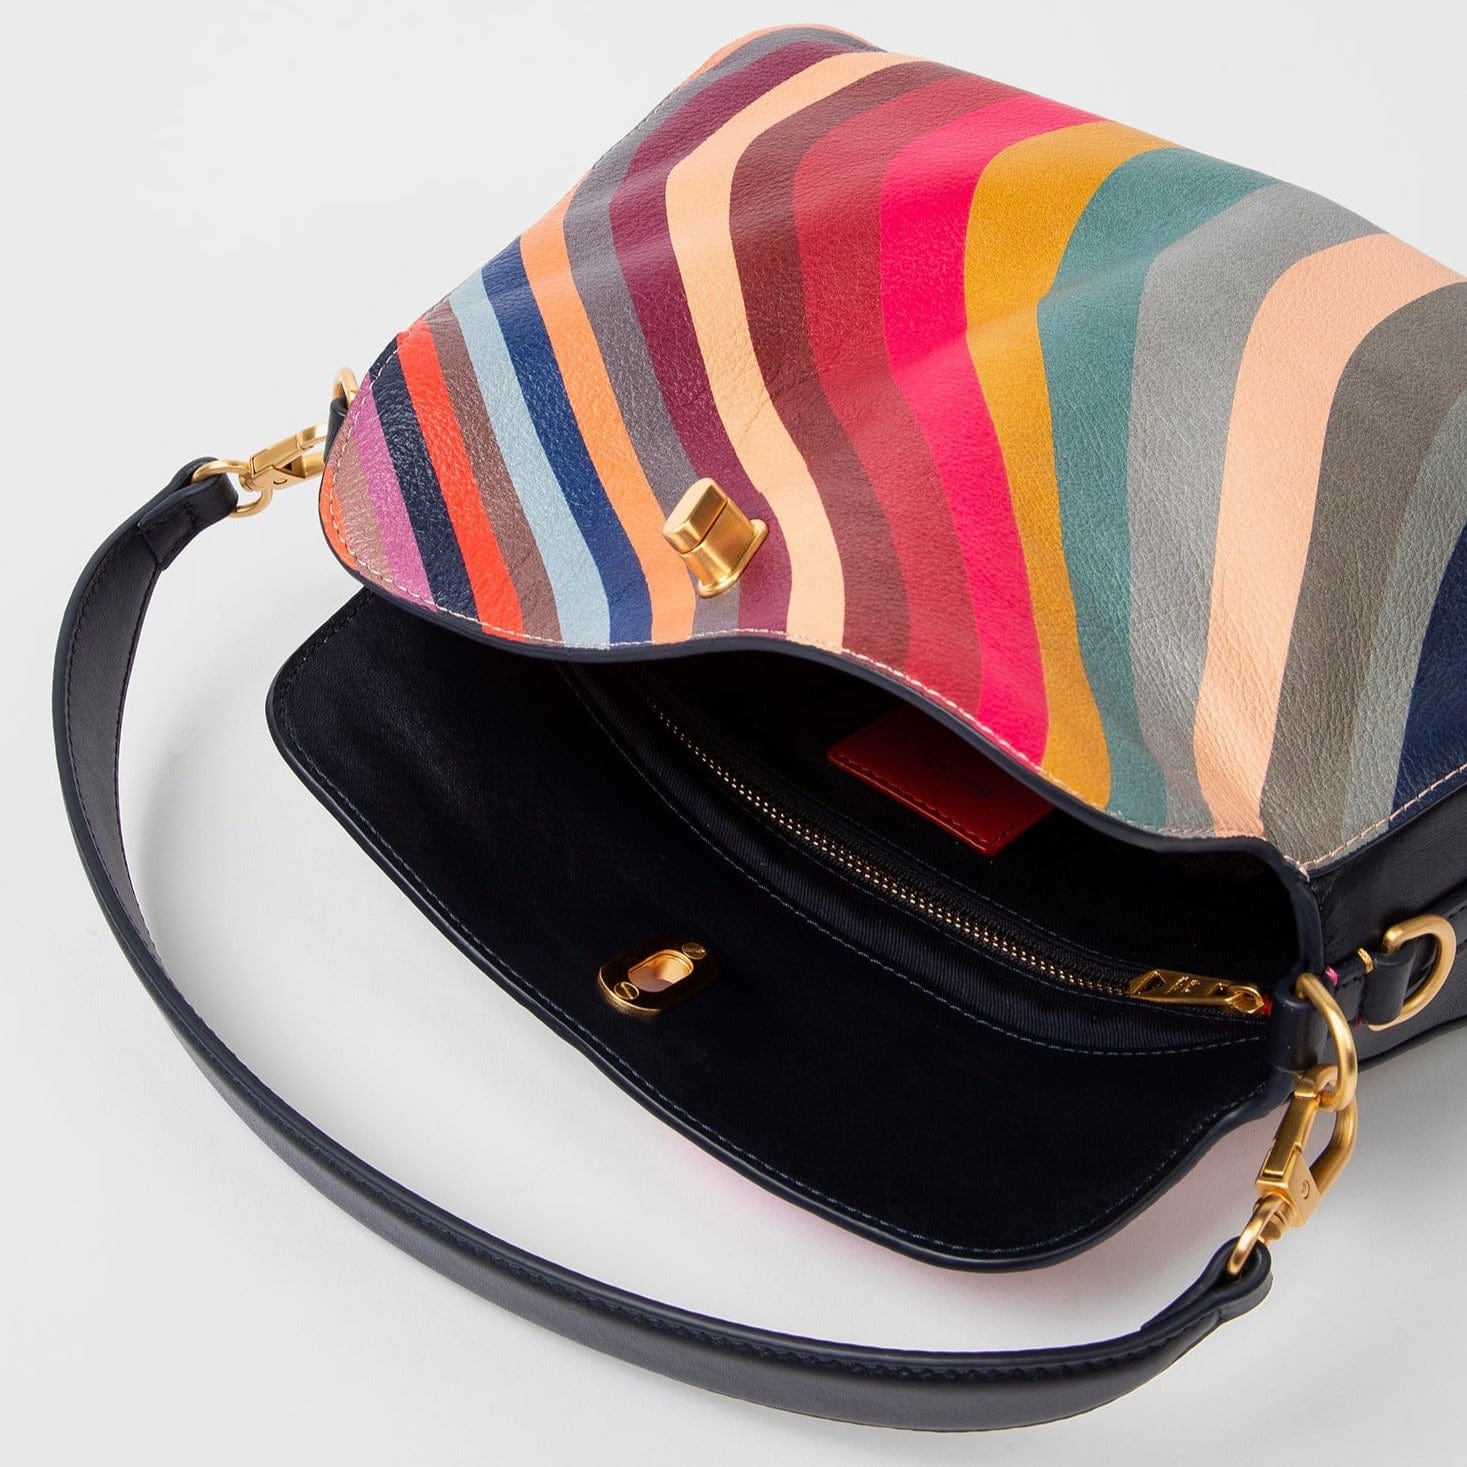 Paul Smith 'Swirl' Shoulder Bag in Multicolour 90